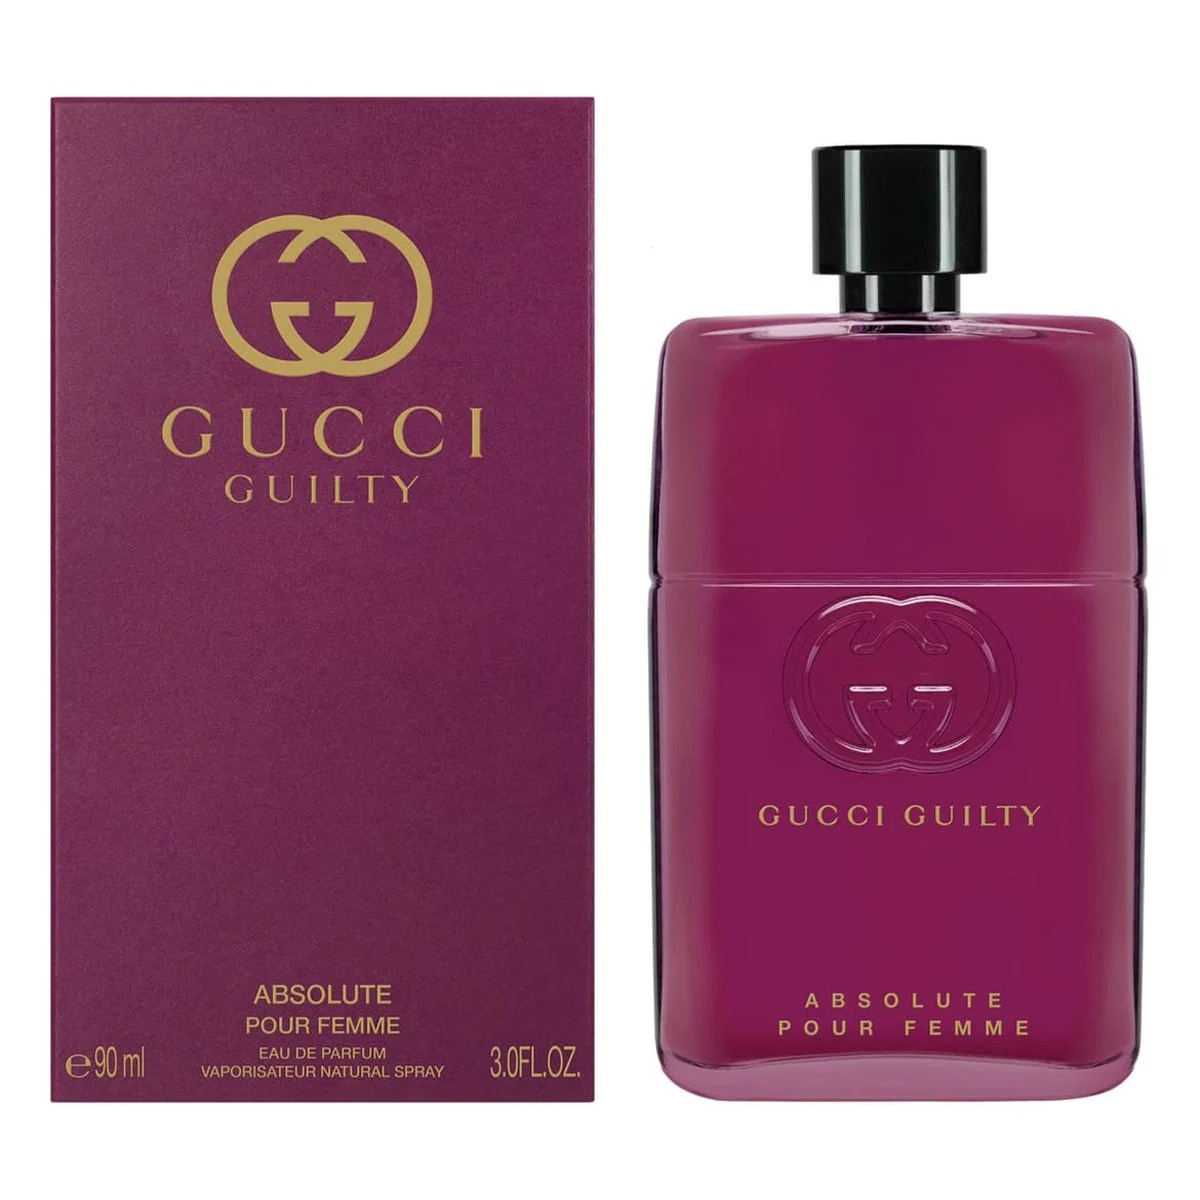 Gucci Guilty Absolute Pour Femme 2